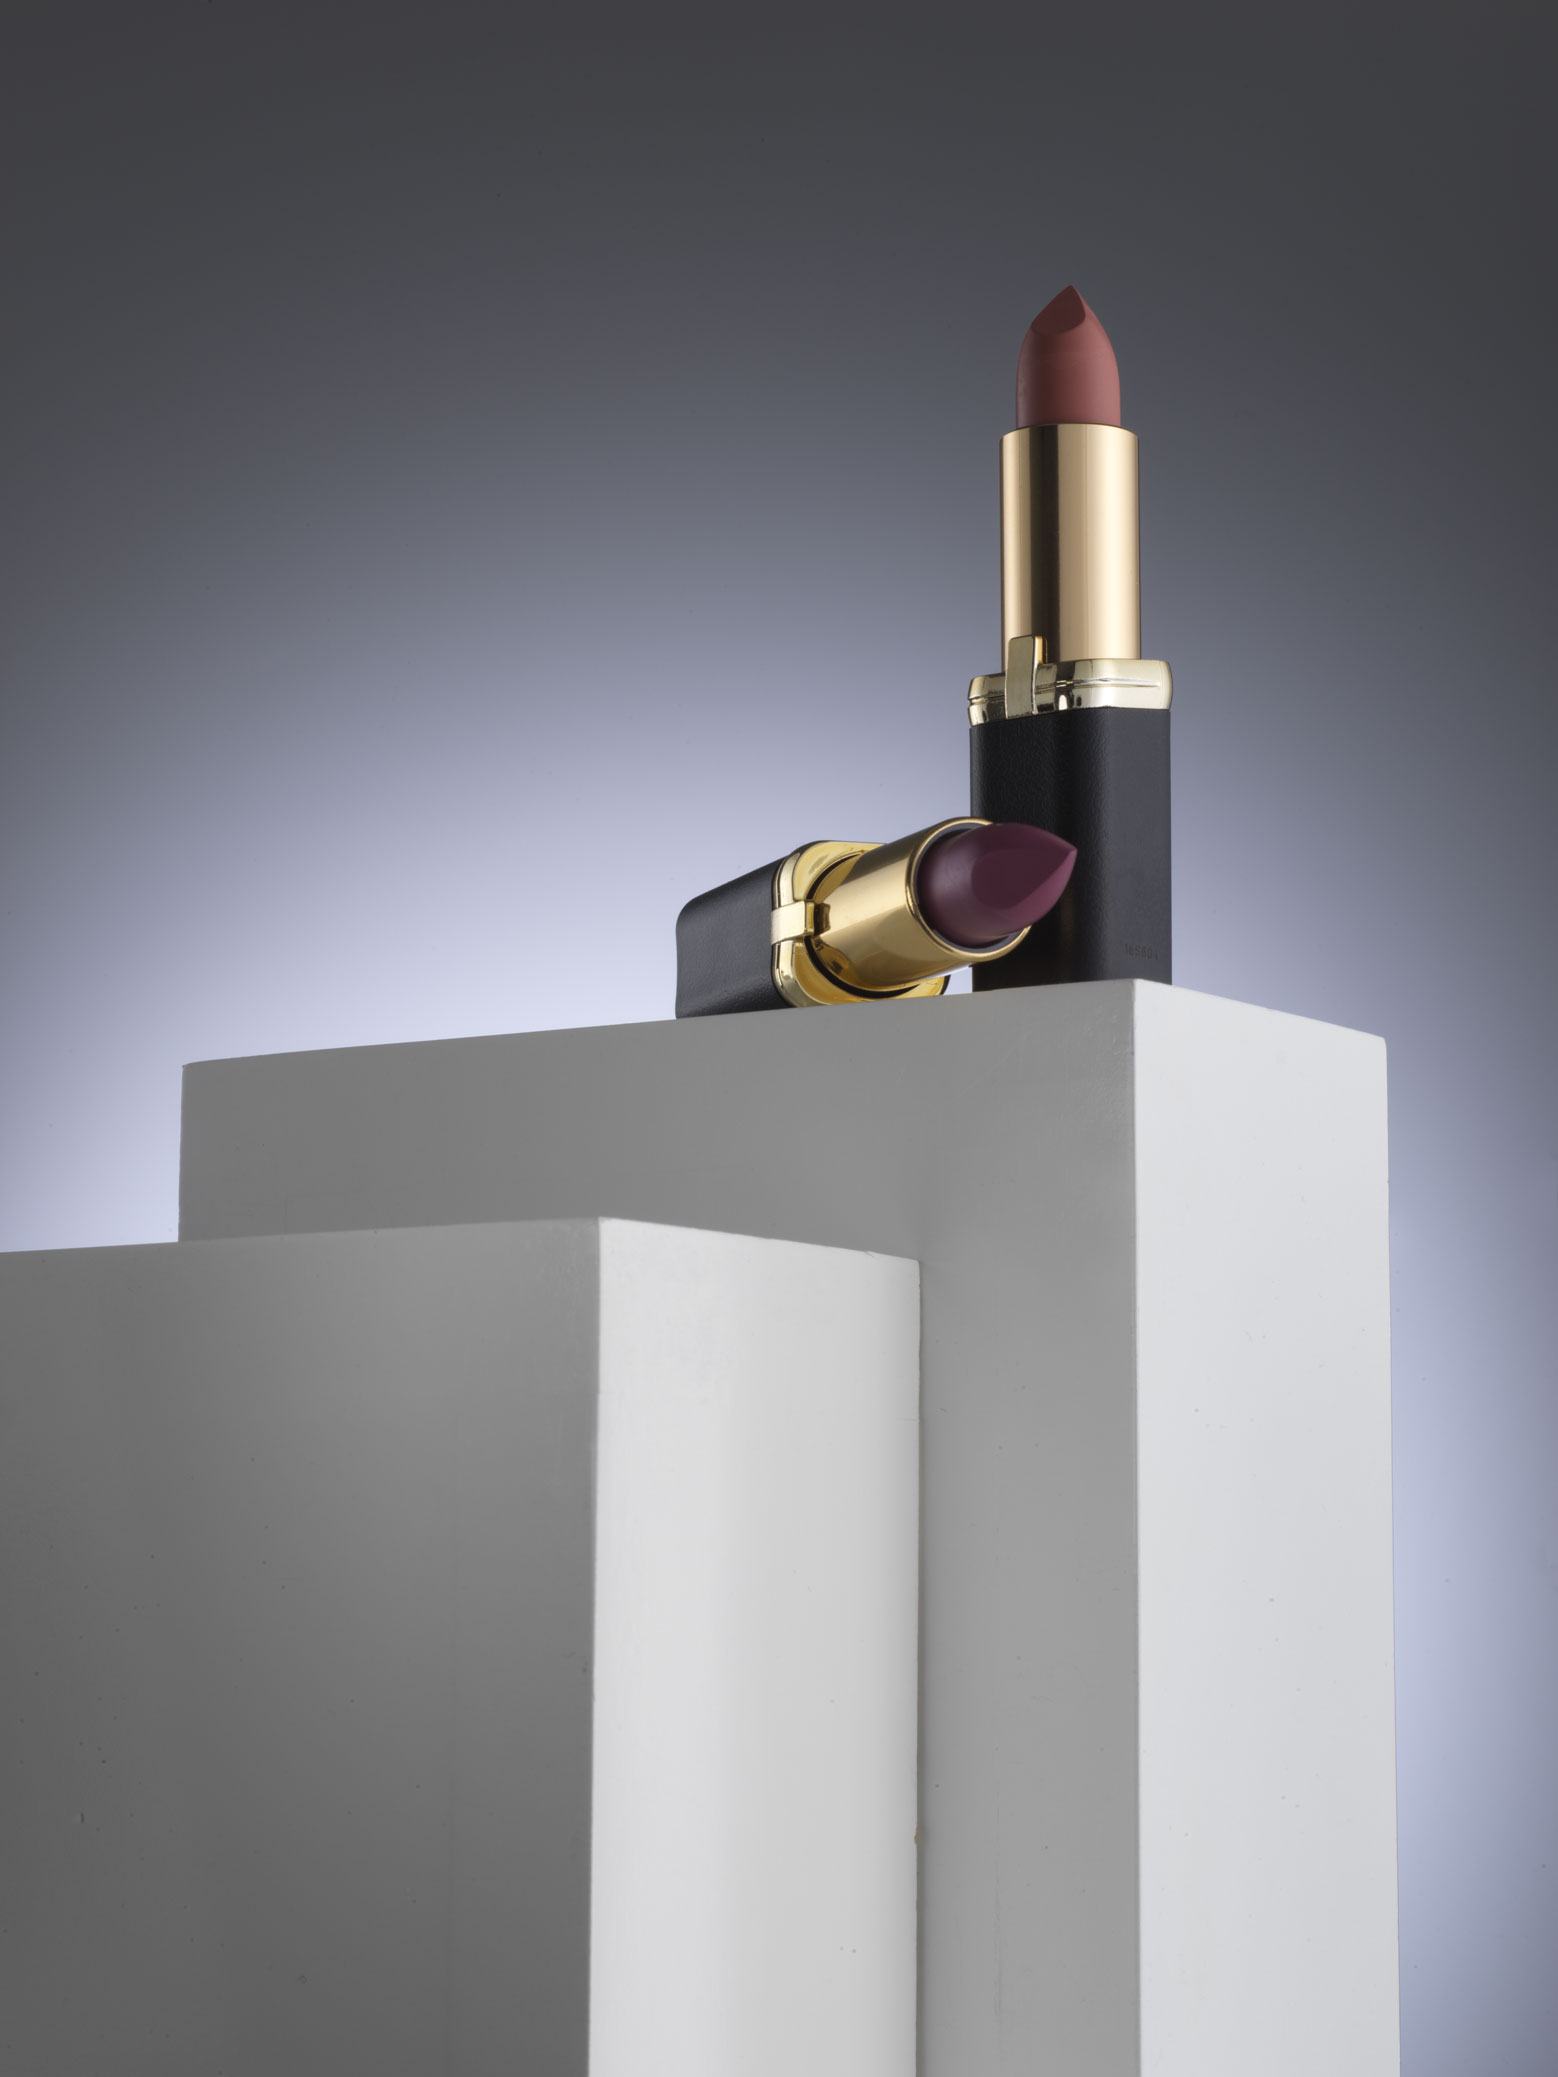 Product photography of lipstick still life using one light setup